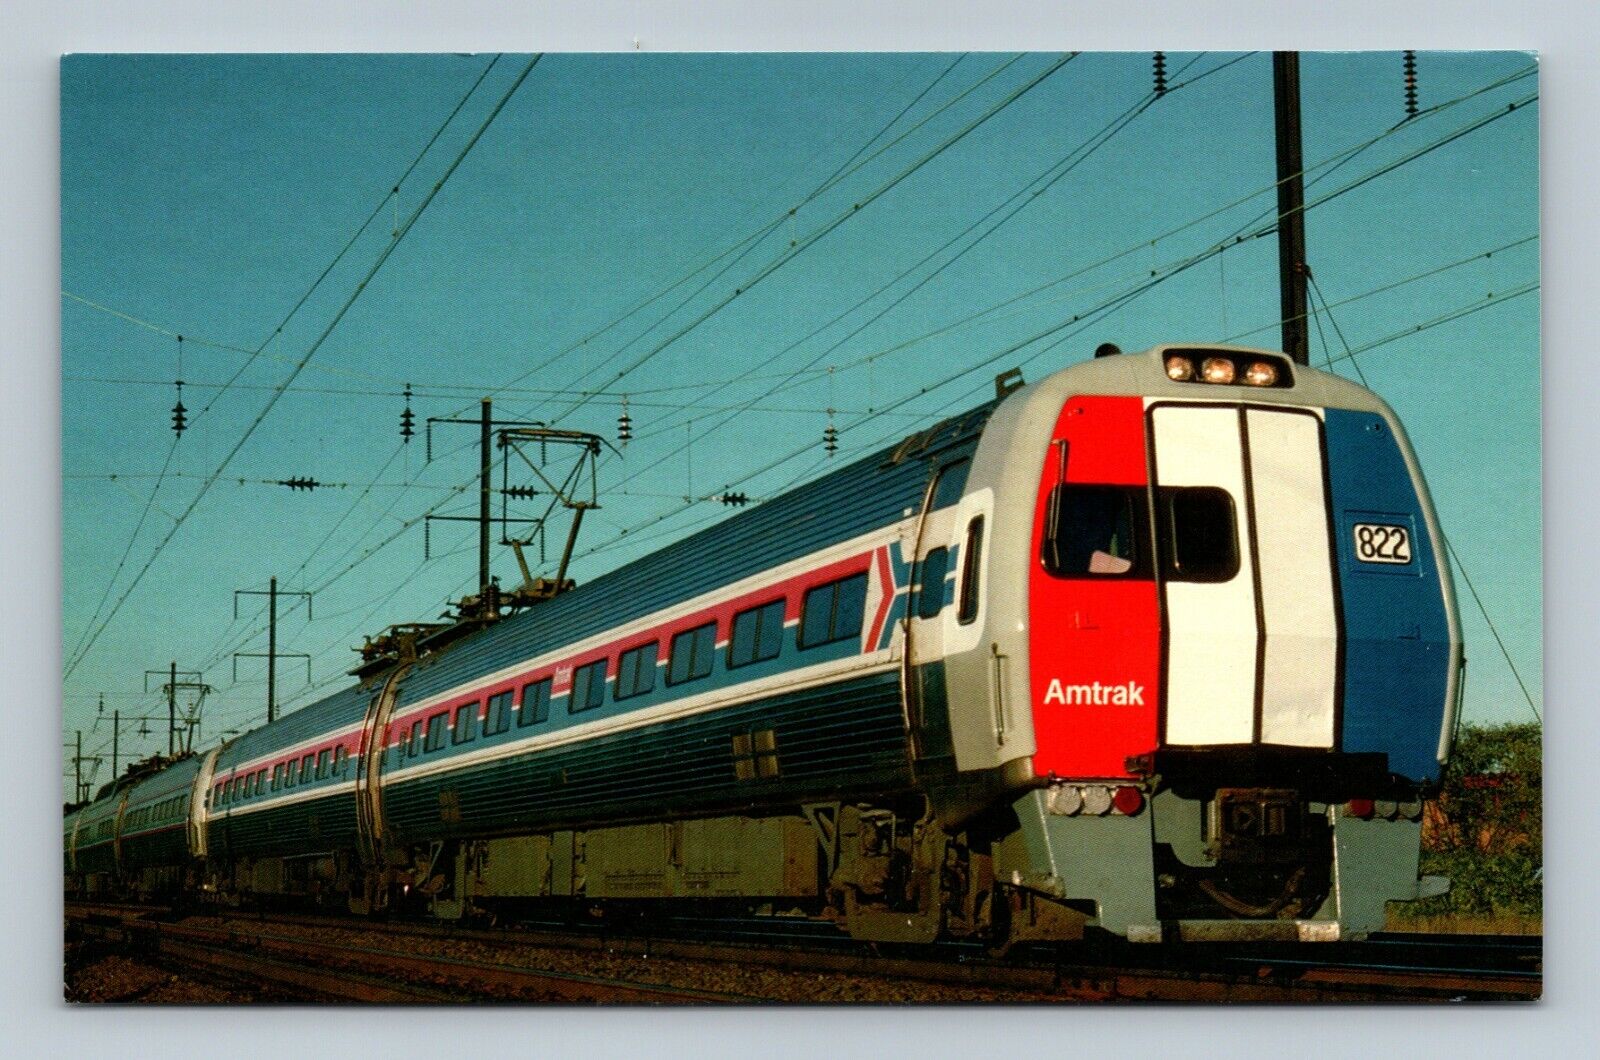 Amtrak Metroliner #822 Electric railroad passenger train postcard